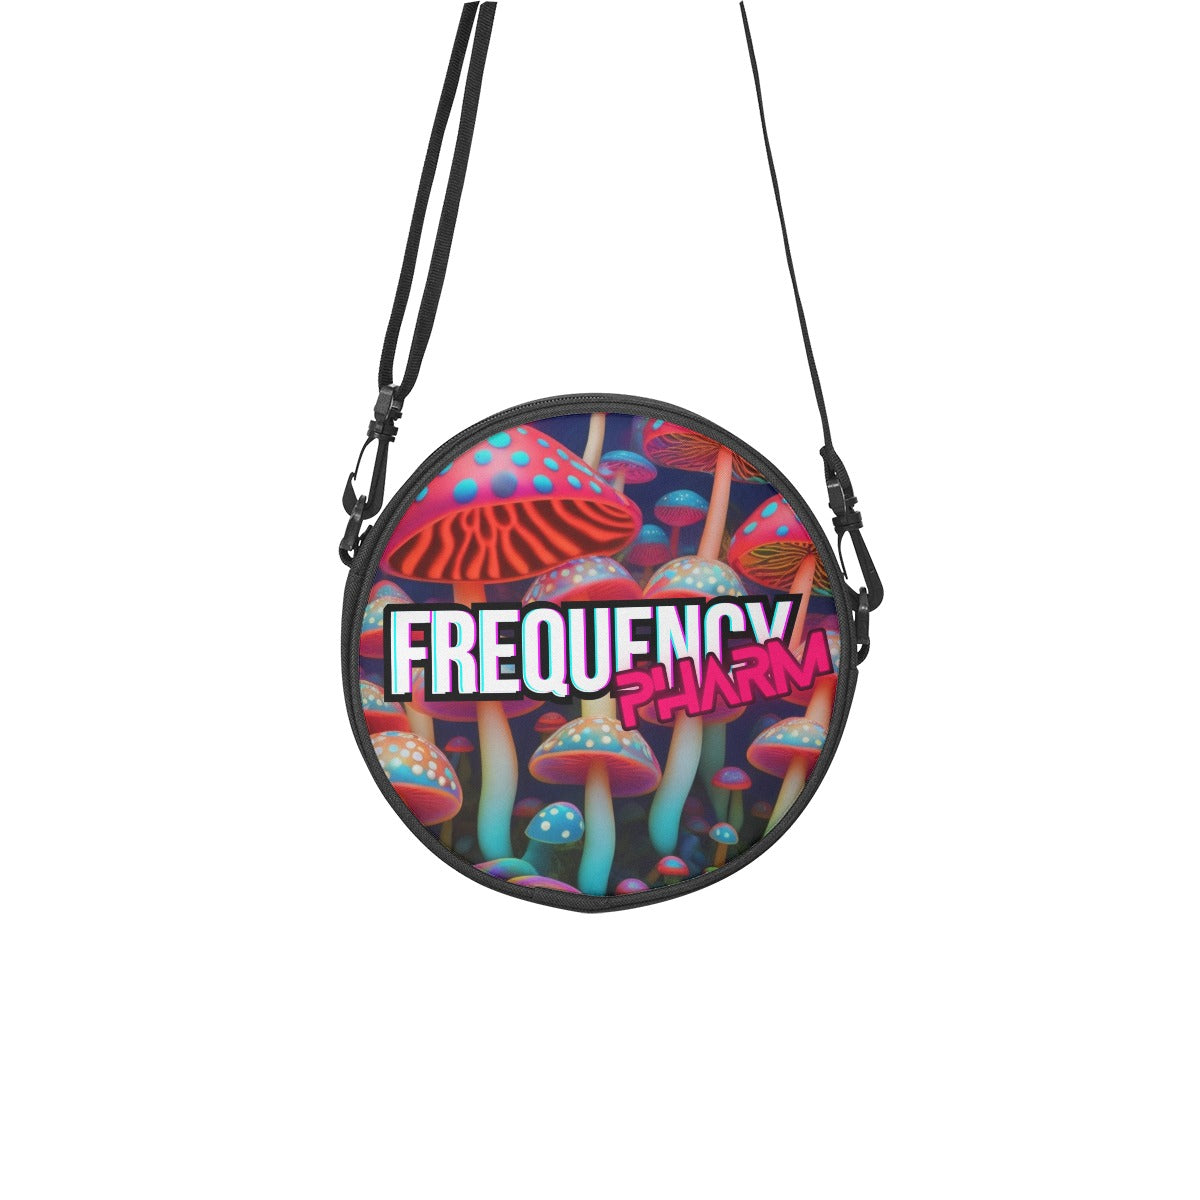 Frequency Pharm Round Satchel Bag